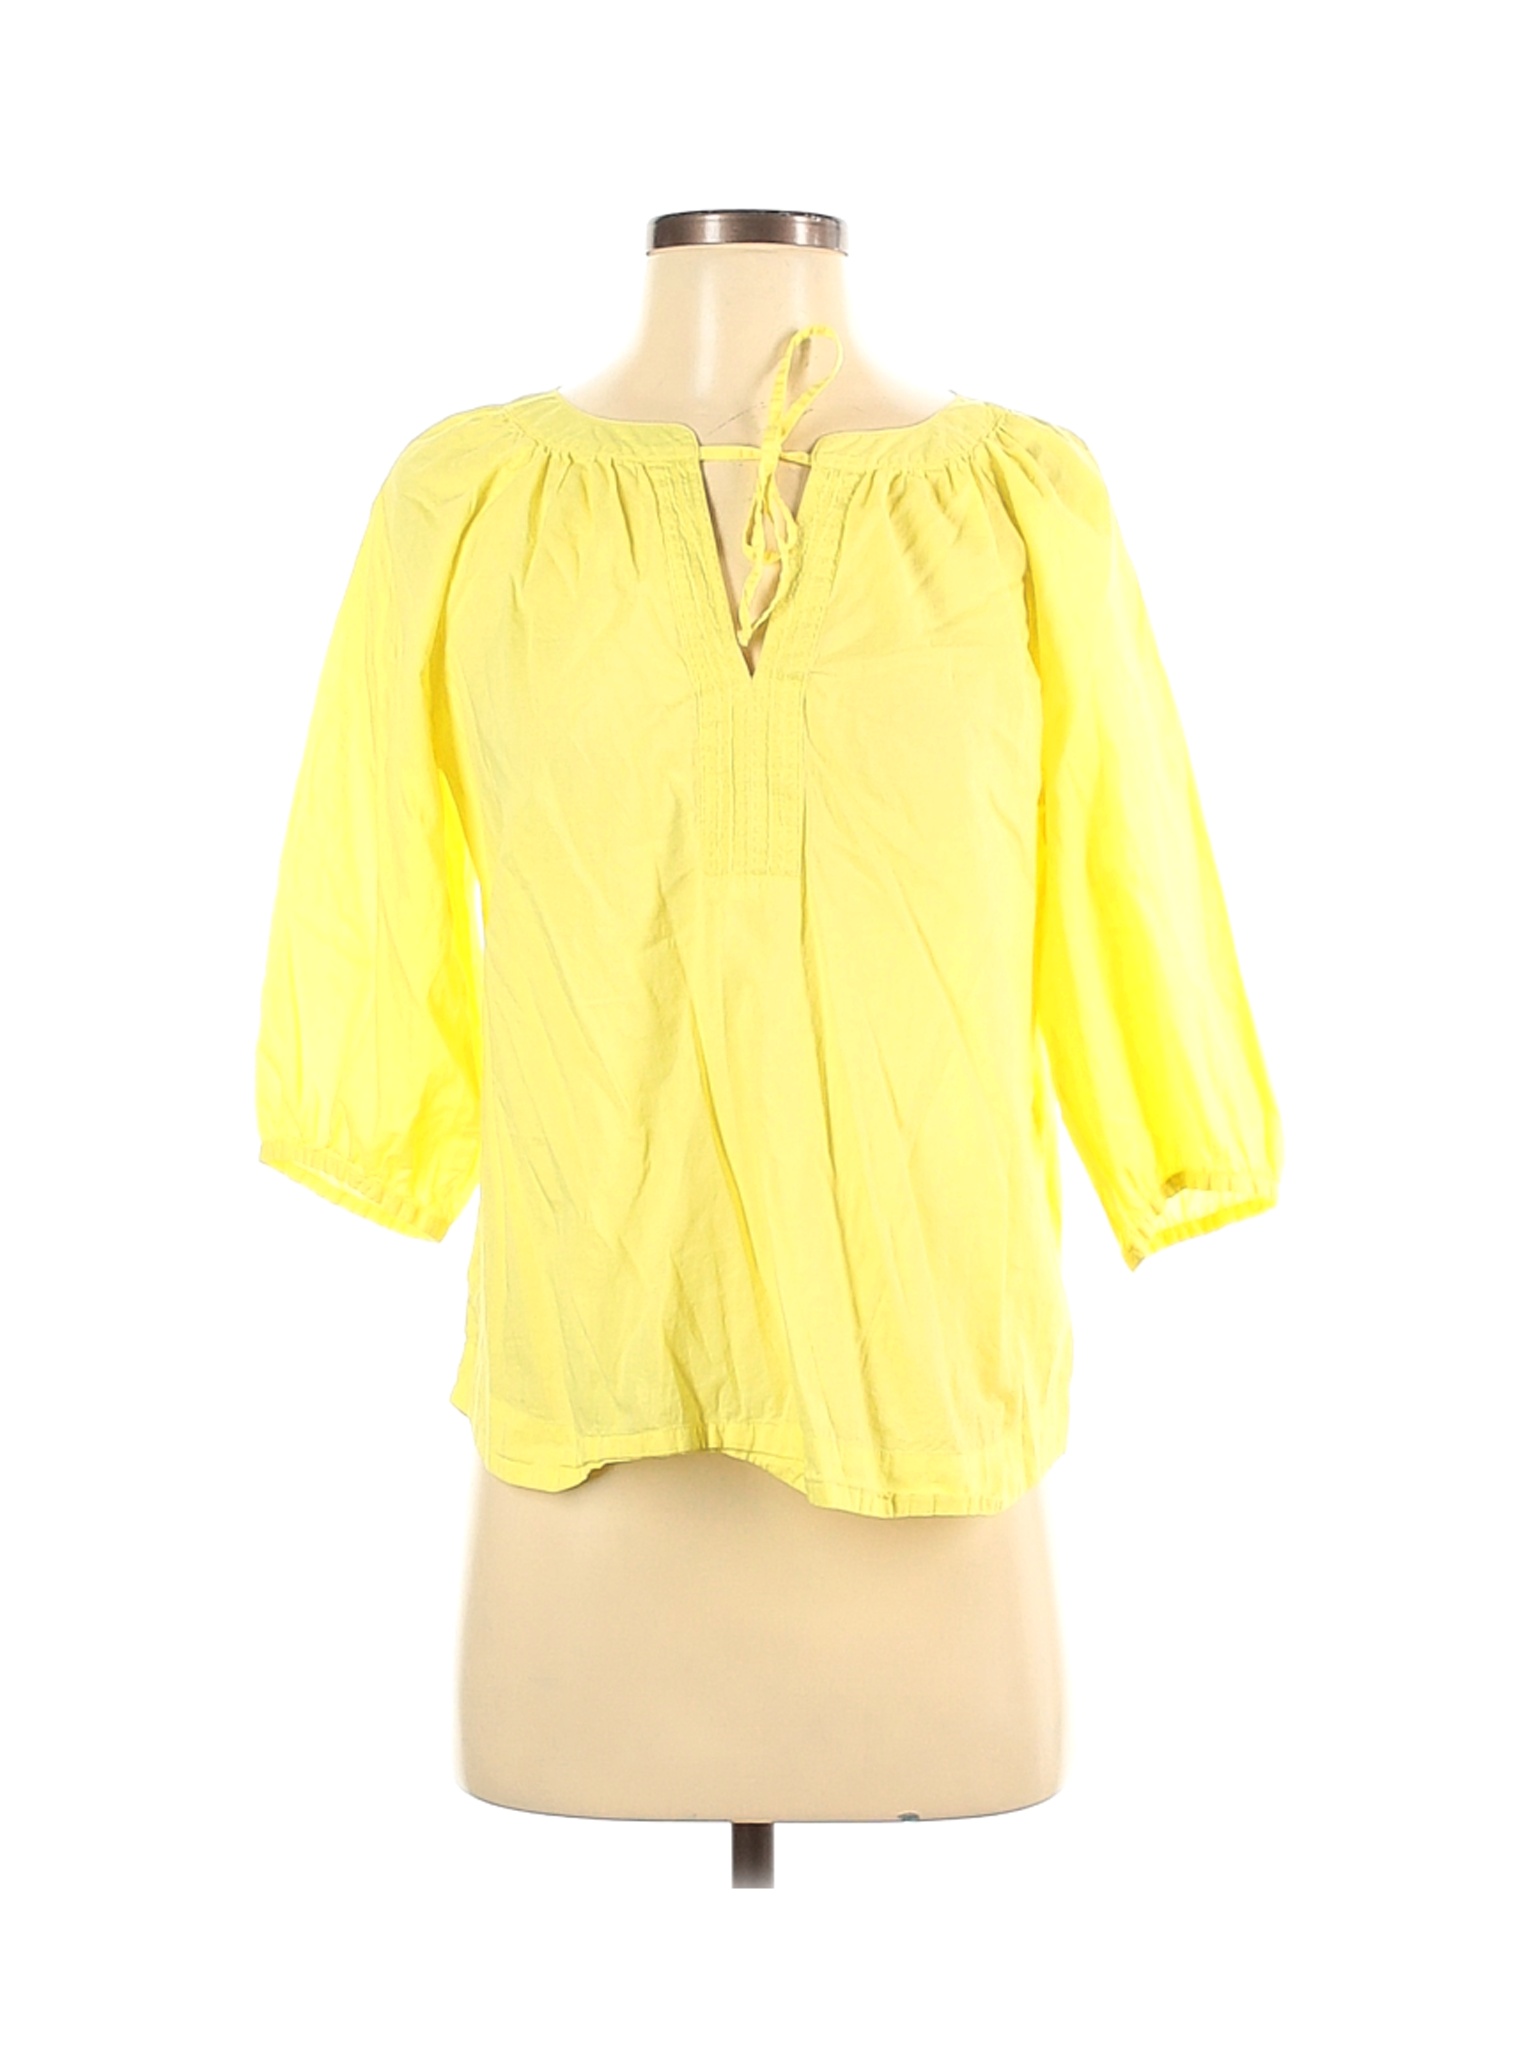 Ann Taylor LOFT Women Yellow 3/4 Sleeve Blouse S Petites | eBay